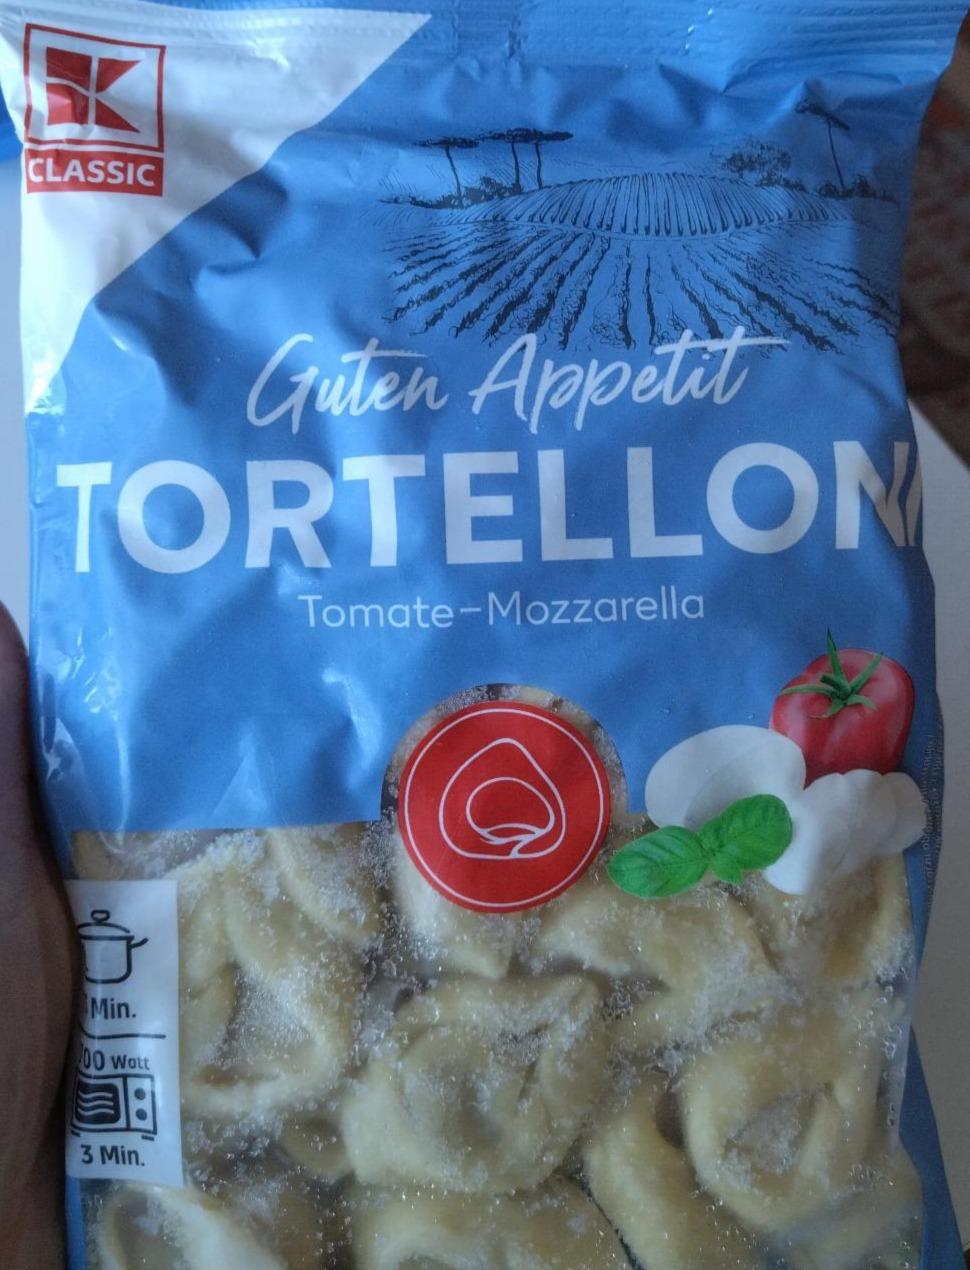 Fotografie - Tortelloni Tomate-Mozzarella K-Classic